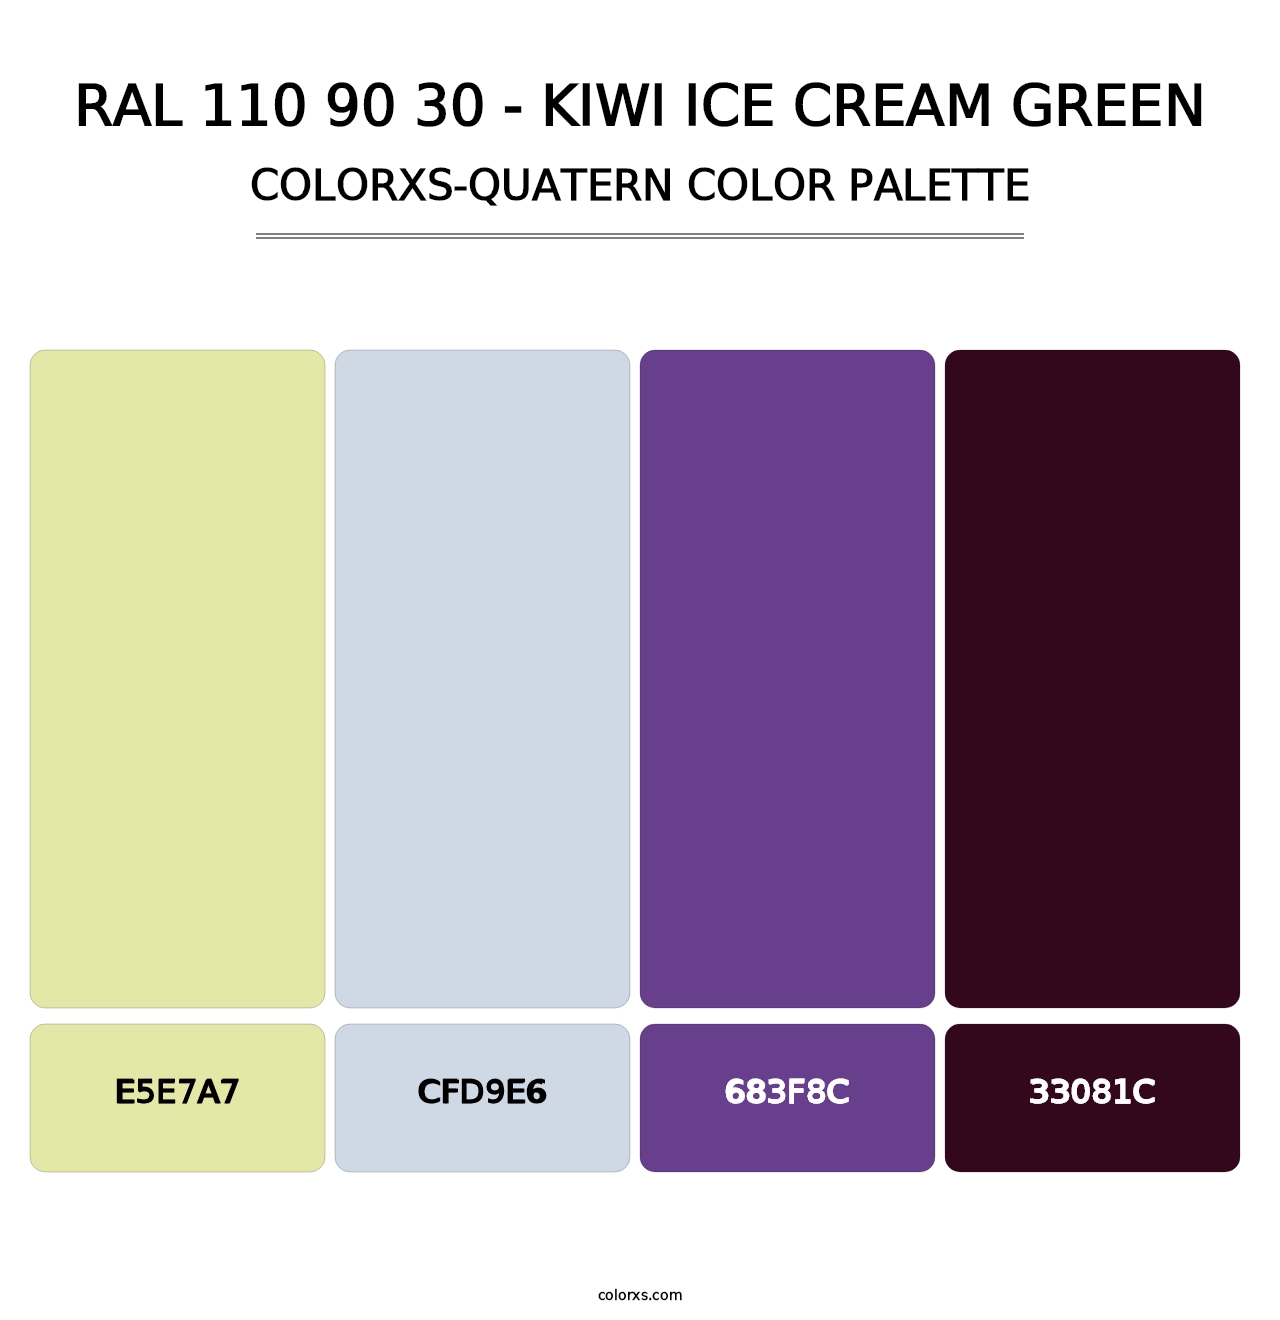 RAL 110 90 30 - Kiwi Ice Cream Green - Colorxs Quatern Palette